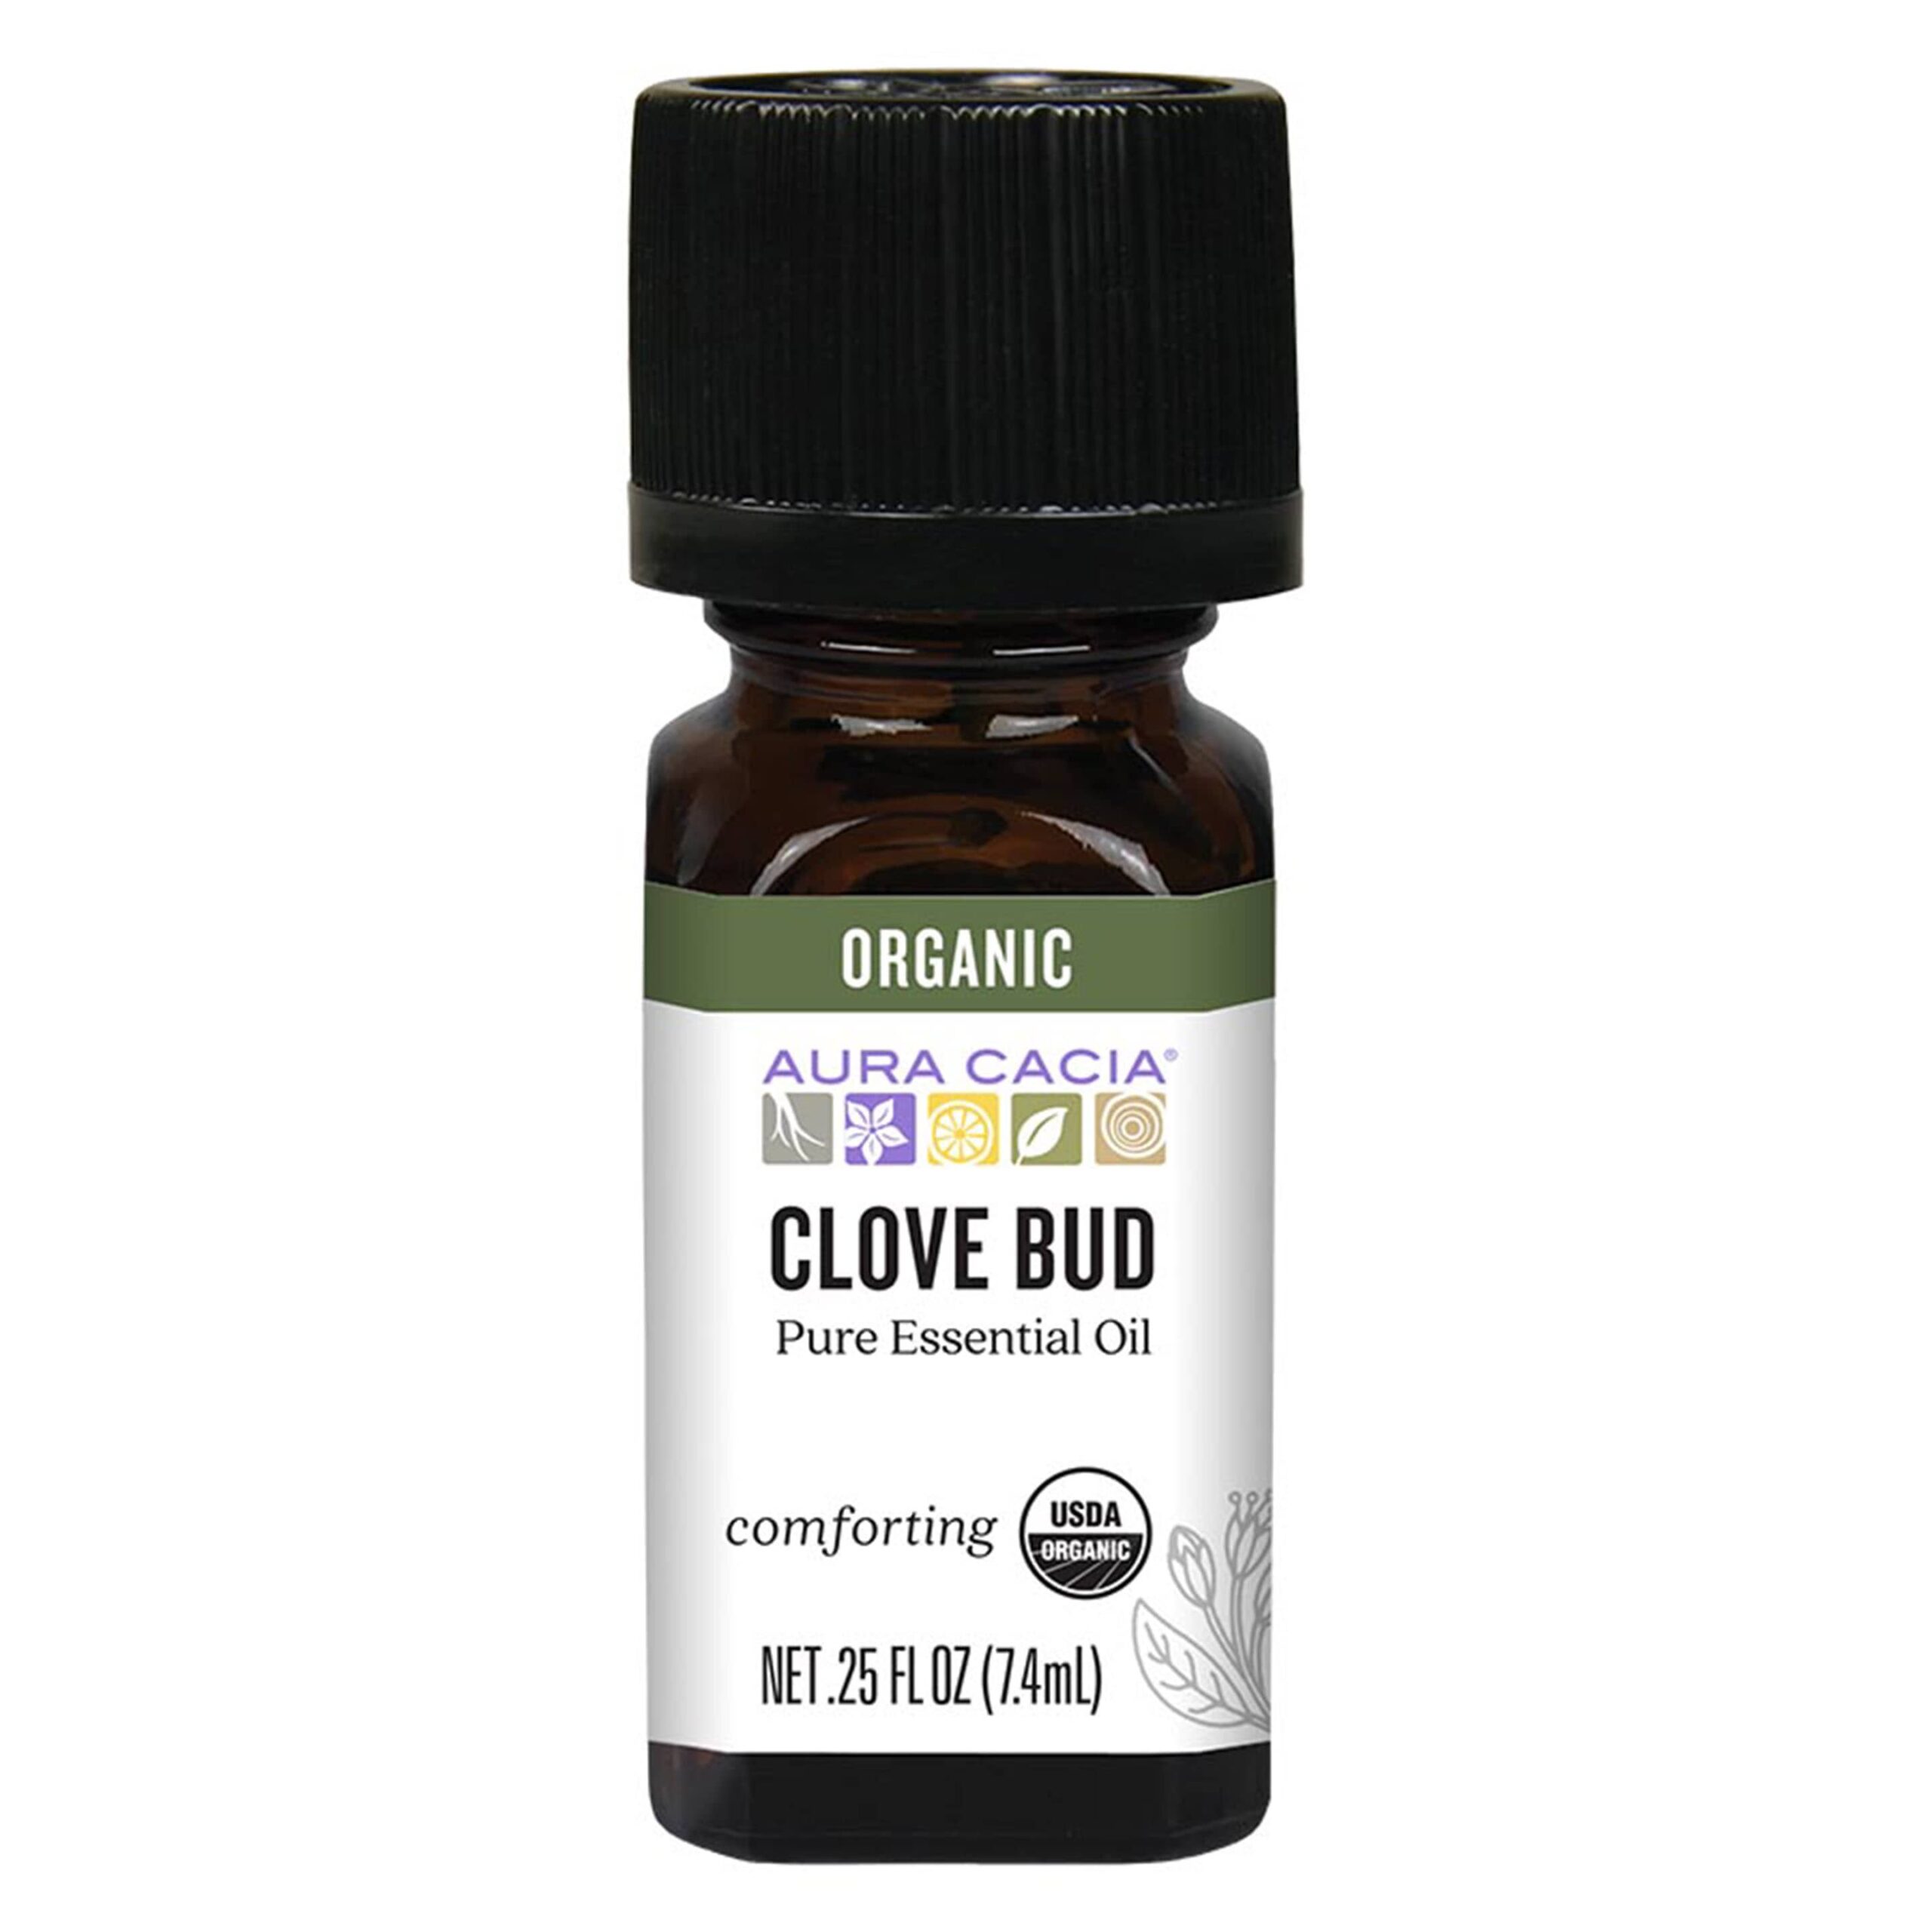 Clove Bud Organic Essential Oil - Aura Cacia